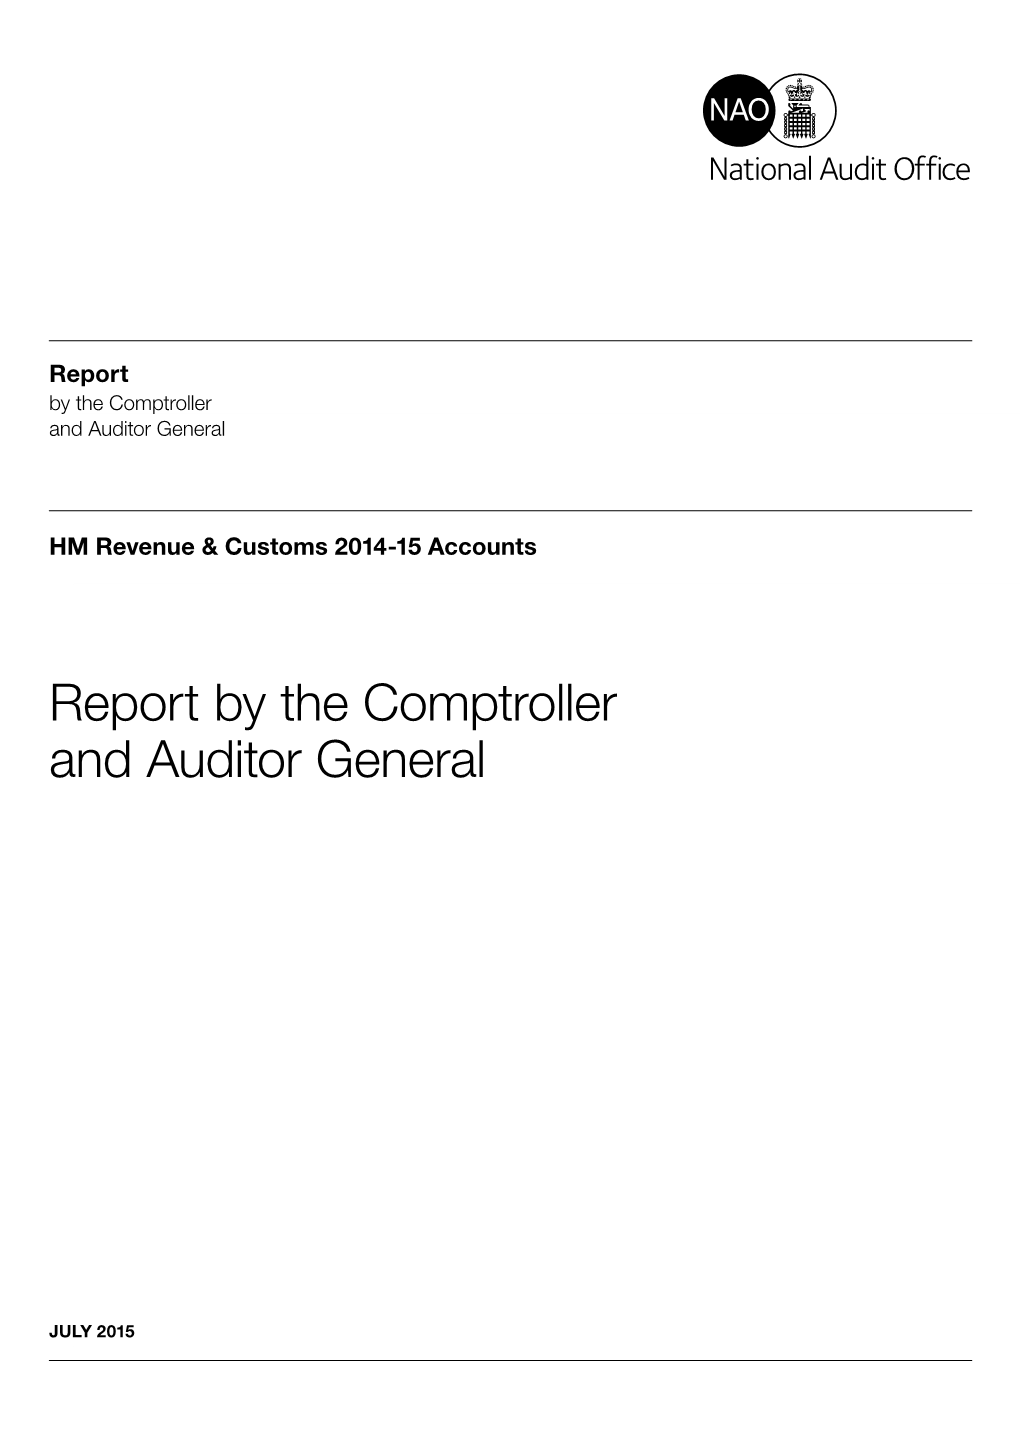 HMRC Standard Report